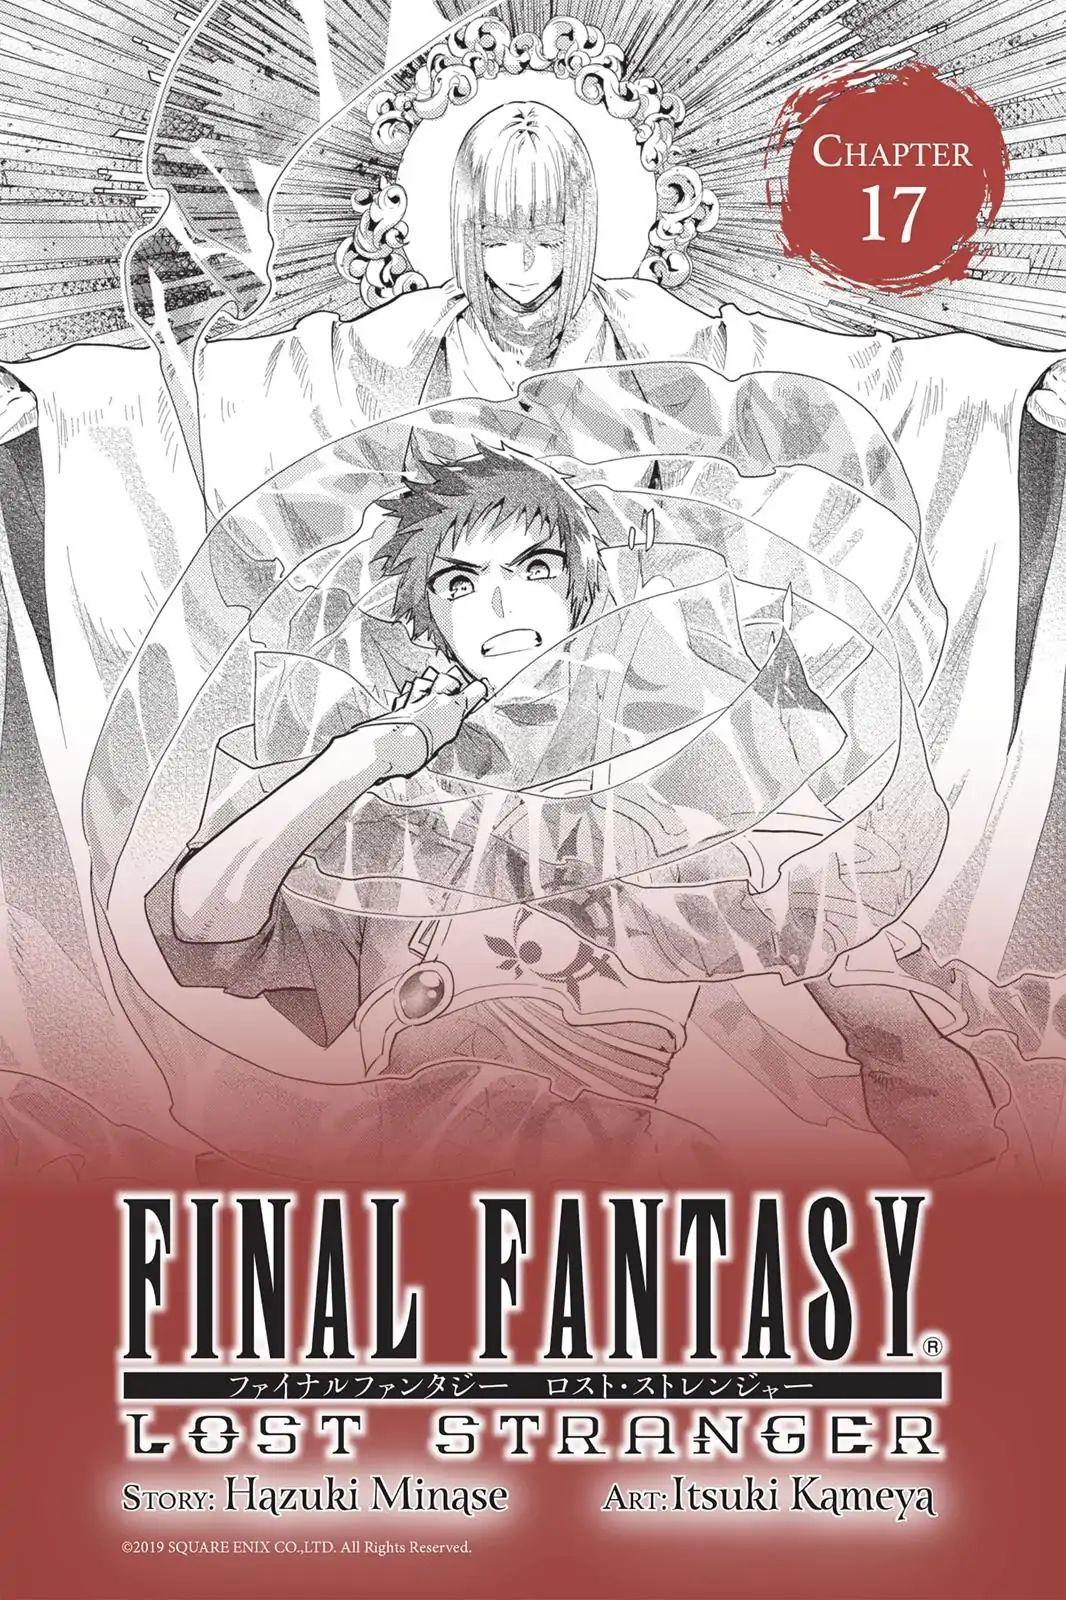 Final Fantasy Lost Stranger Chapter 17 Read Final Fantasy Lost Stranger Chapter 17 Online At Heroes Coach